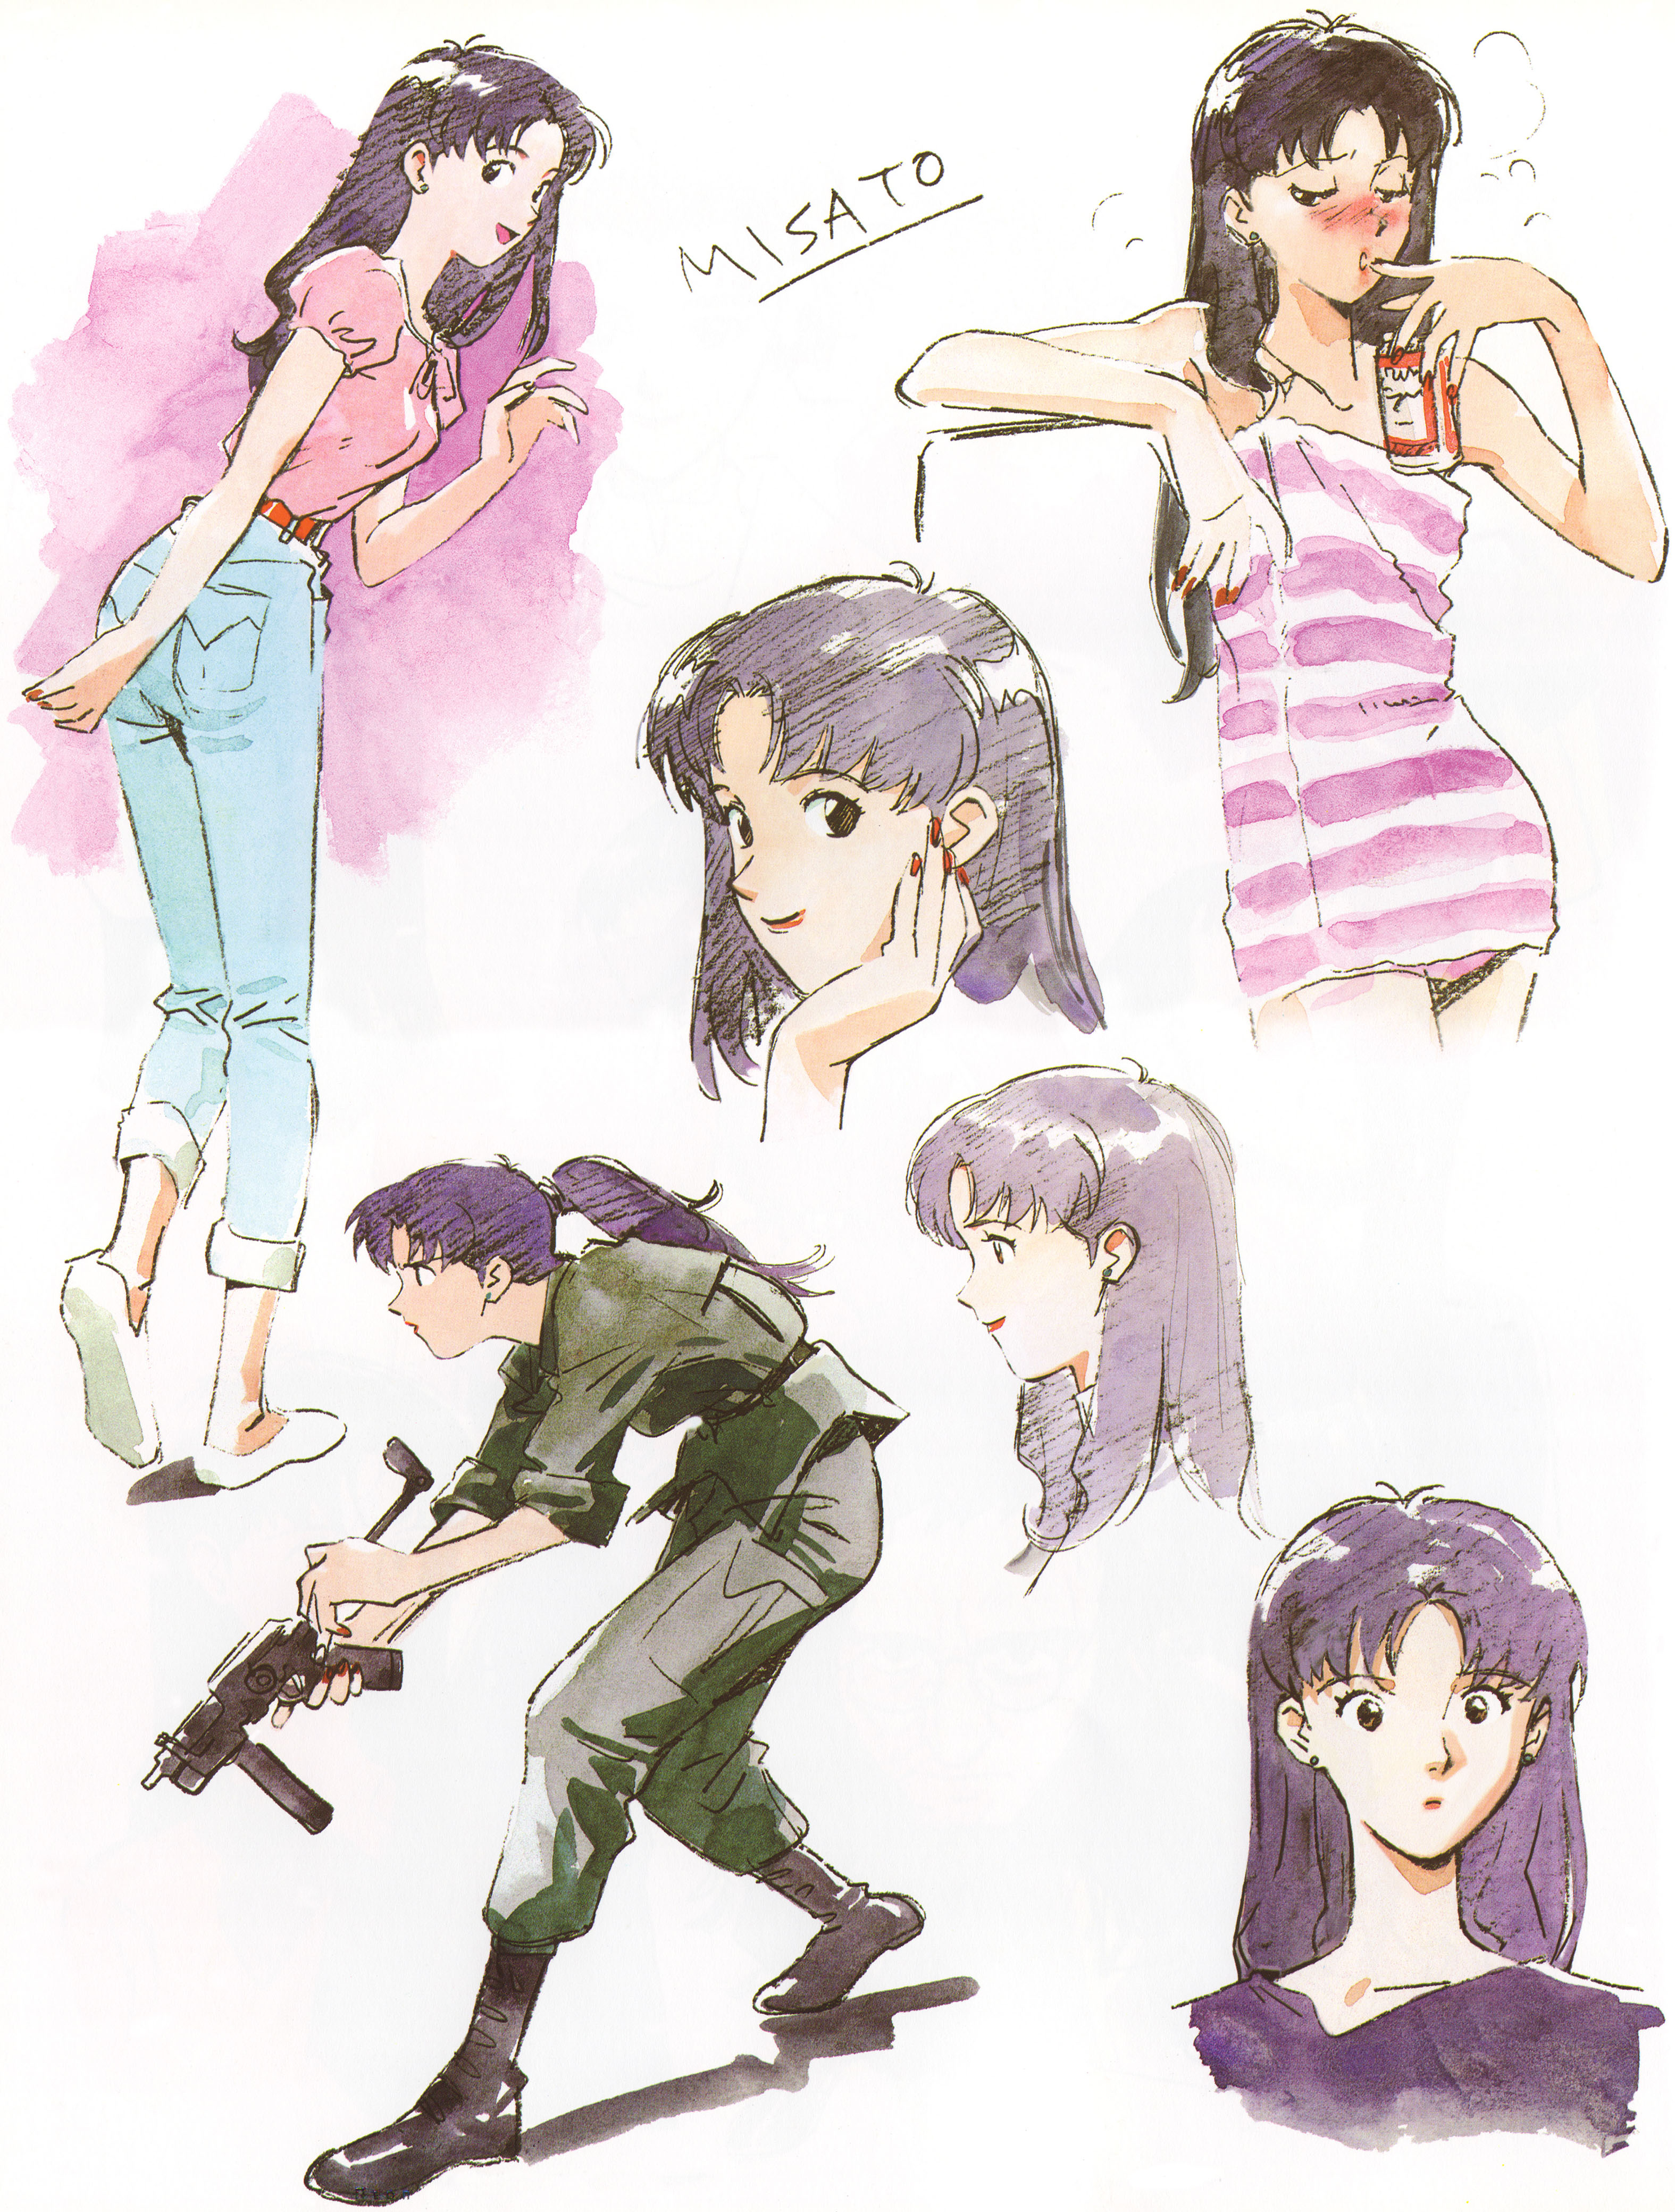 Anime 3150x4160 Katsuragi Misato Neon Genesis Evangelion women